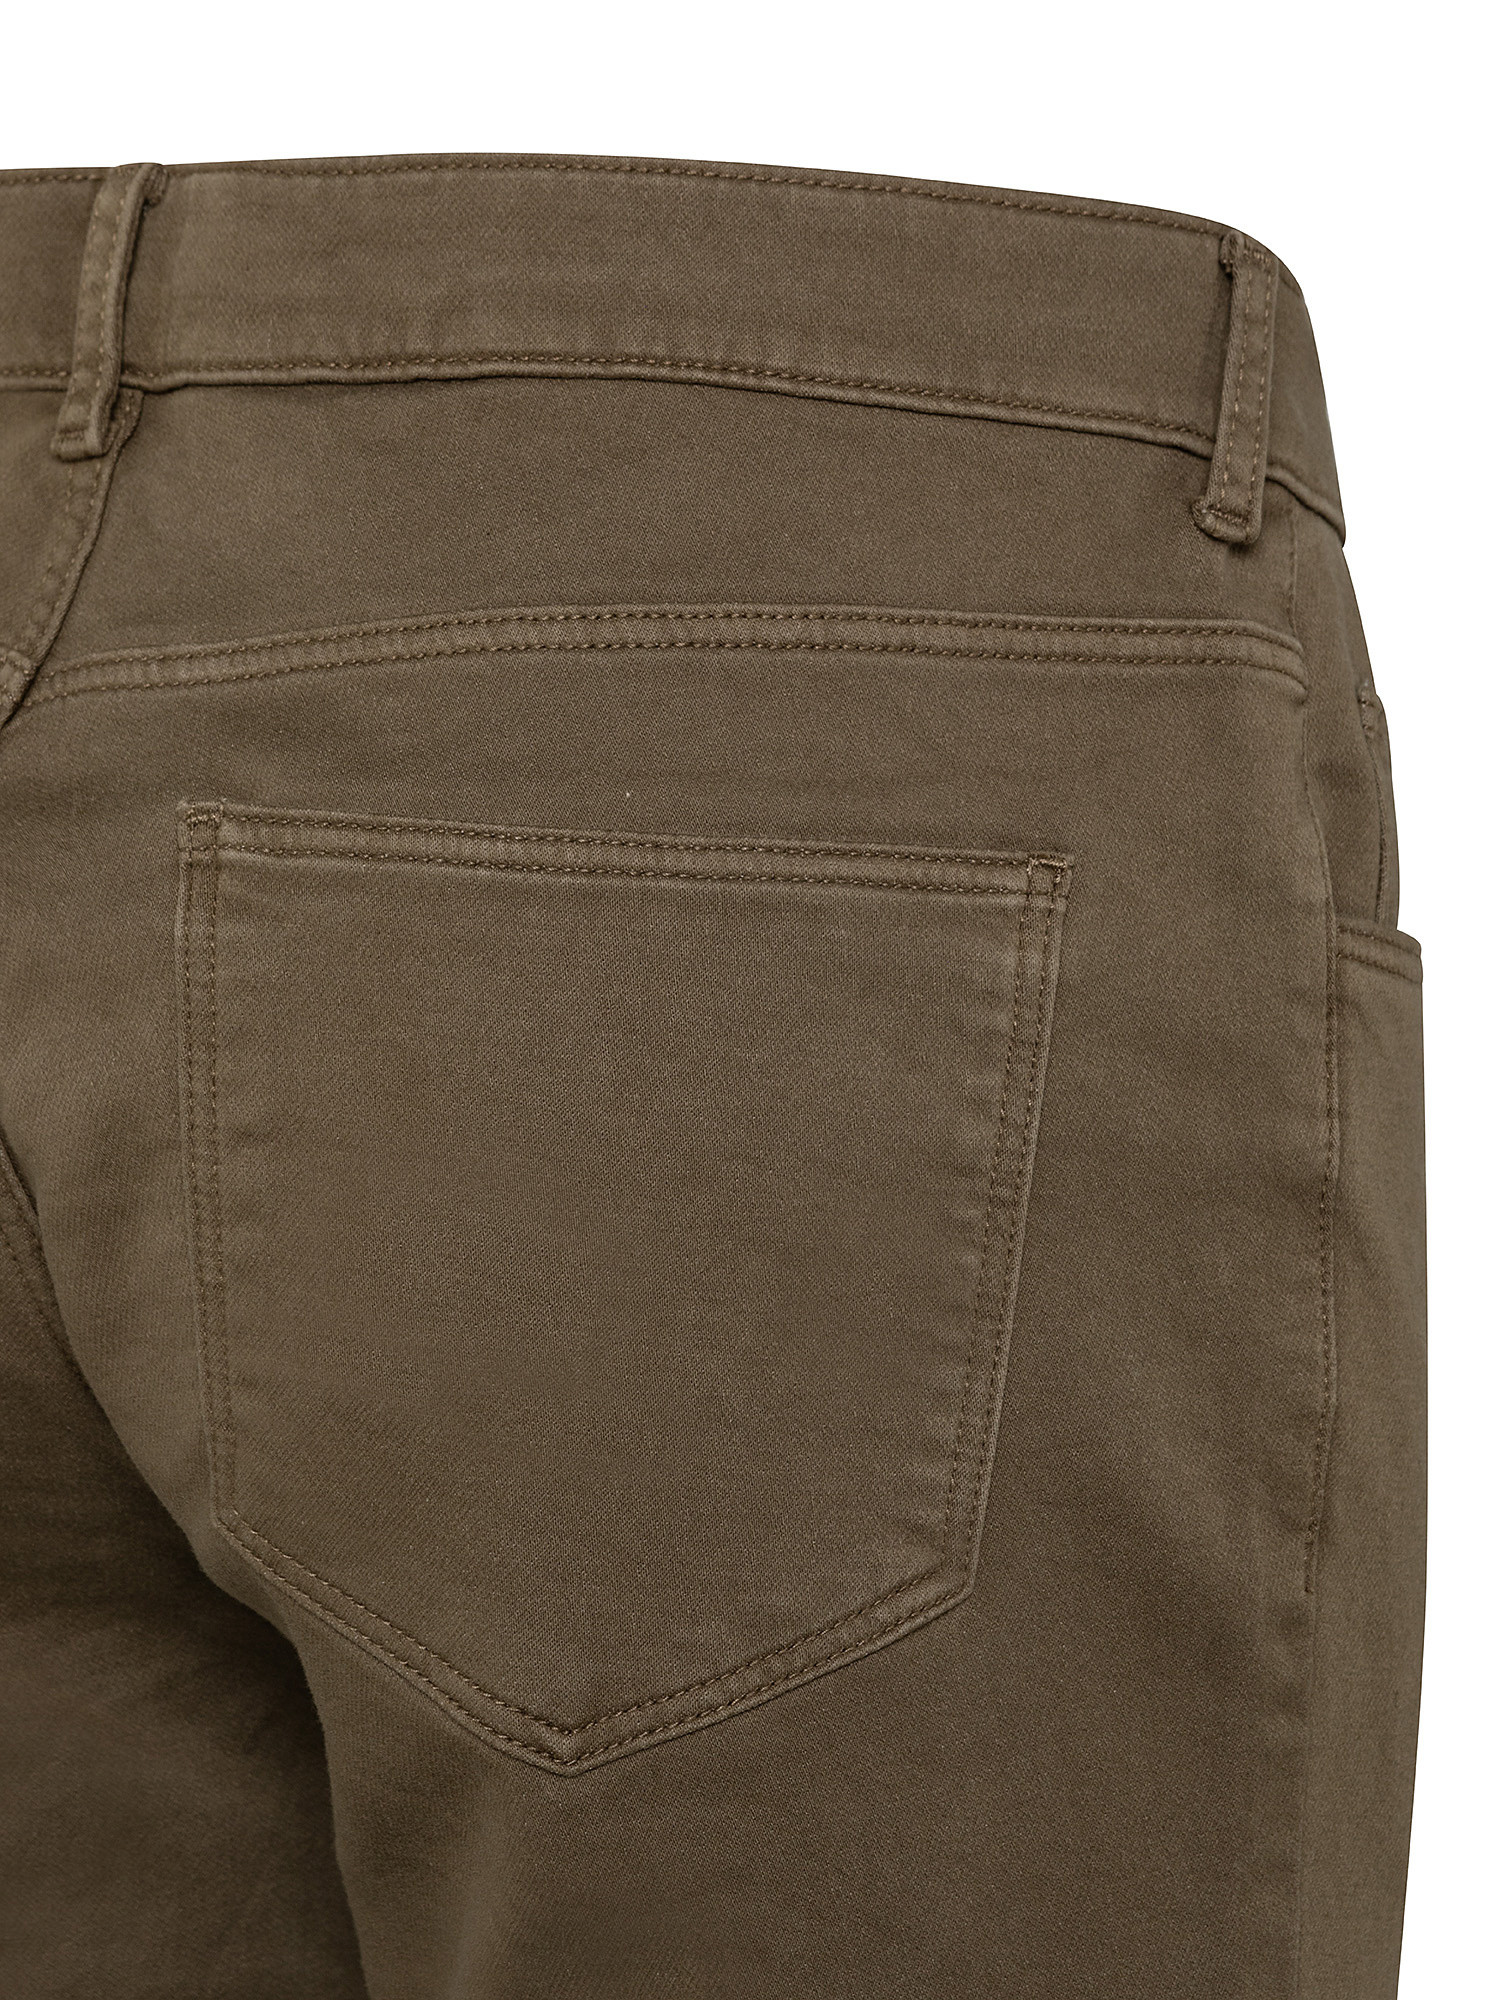 Pantalone 5 tasche slim in felpa, Verde scuro, large